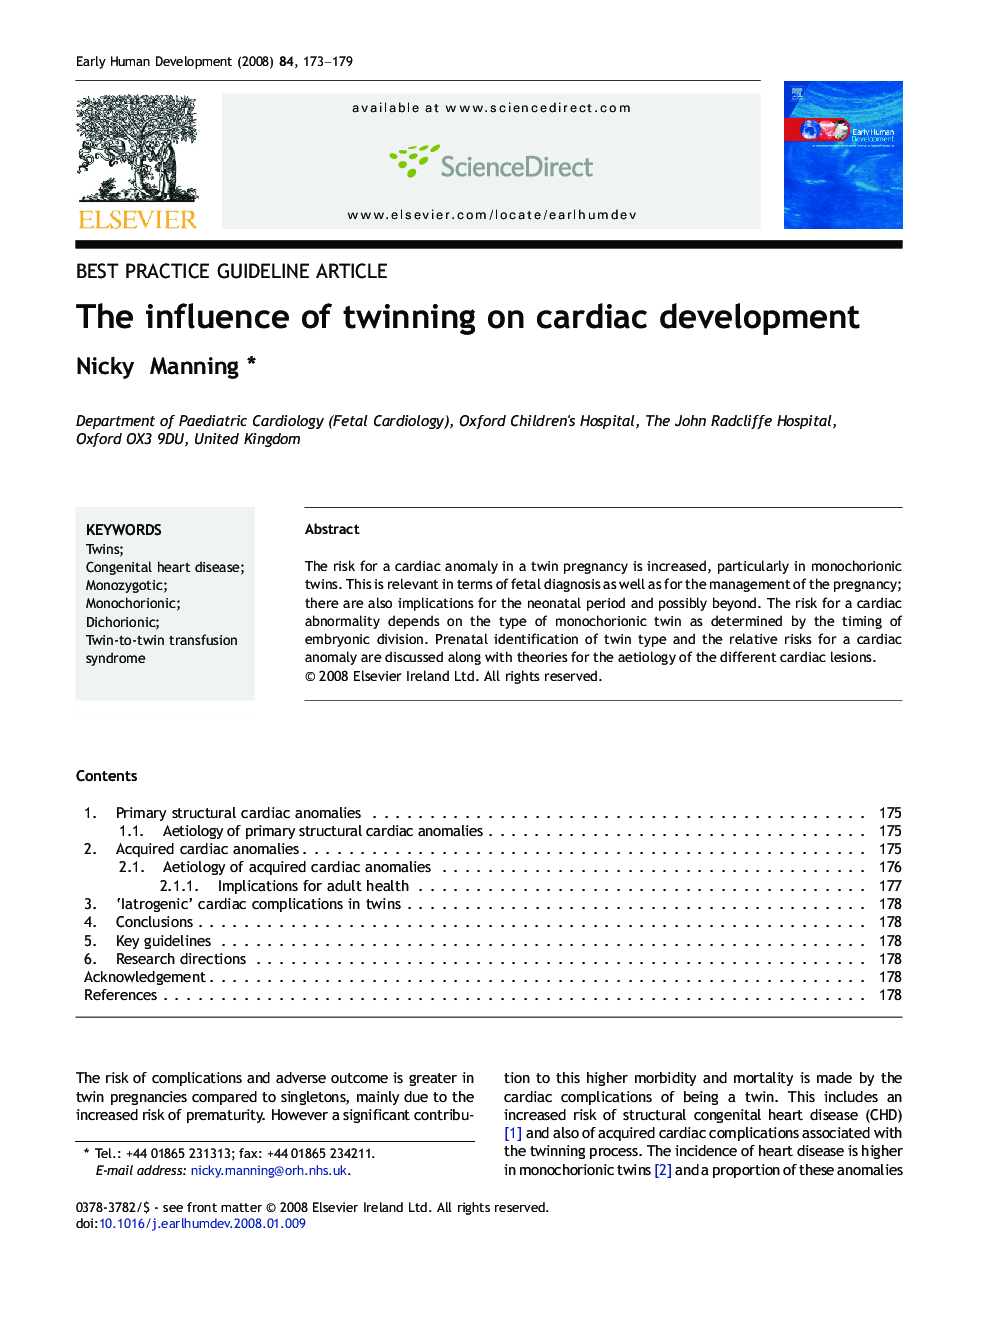 The influence of twinning on cardiac development